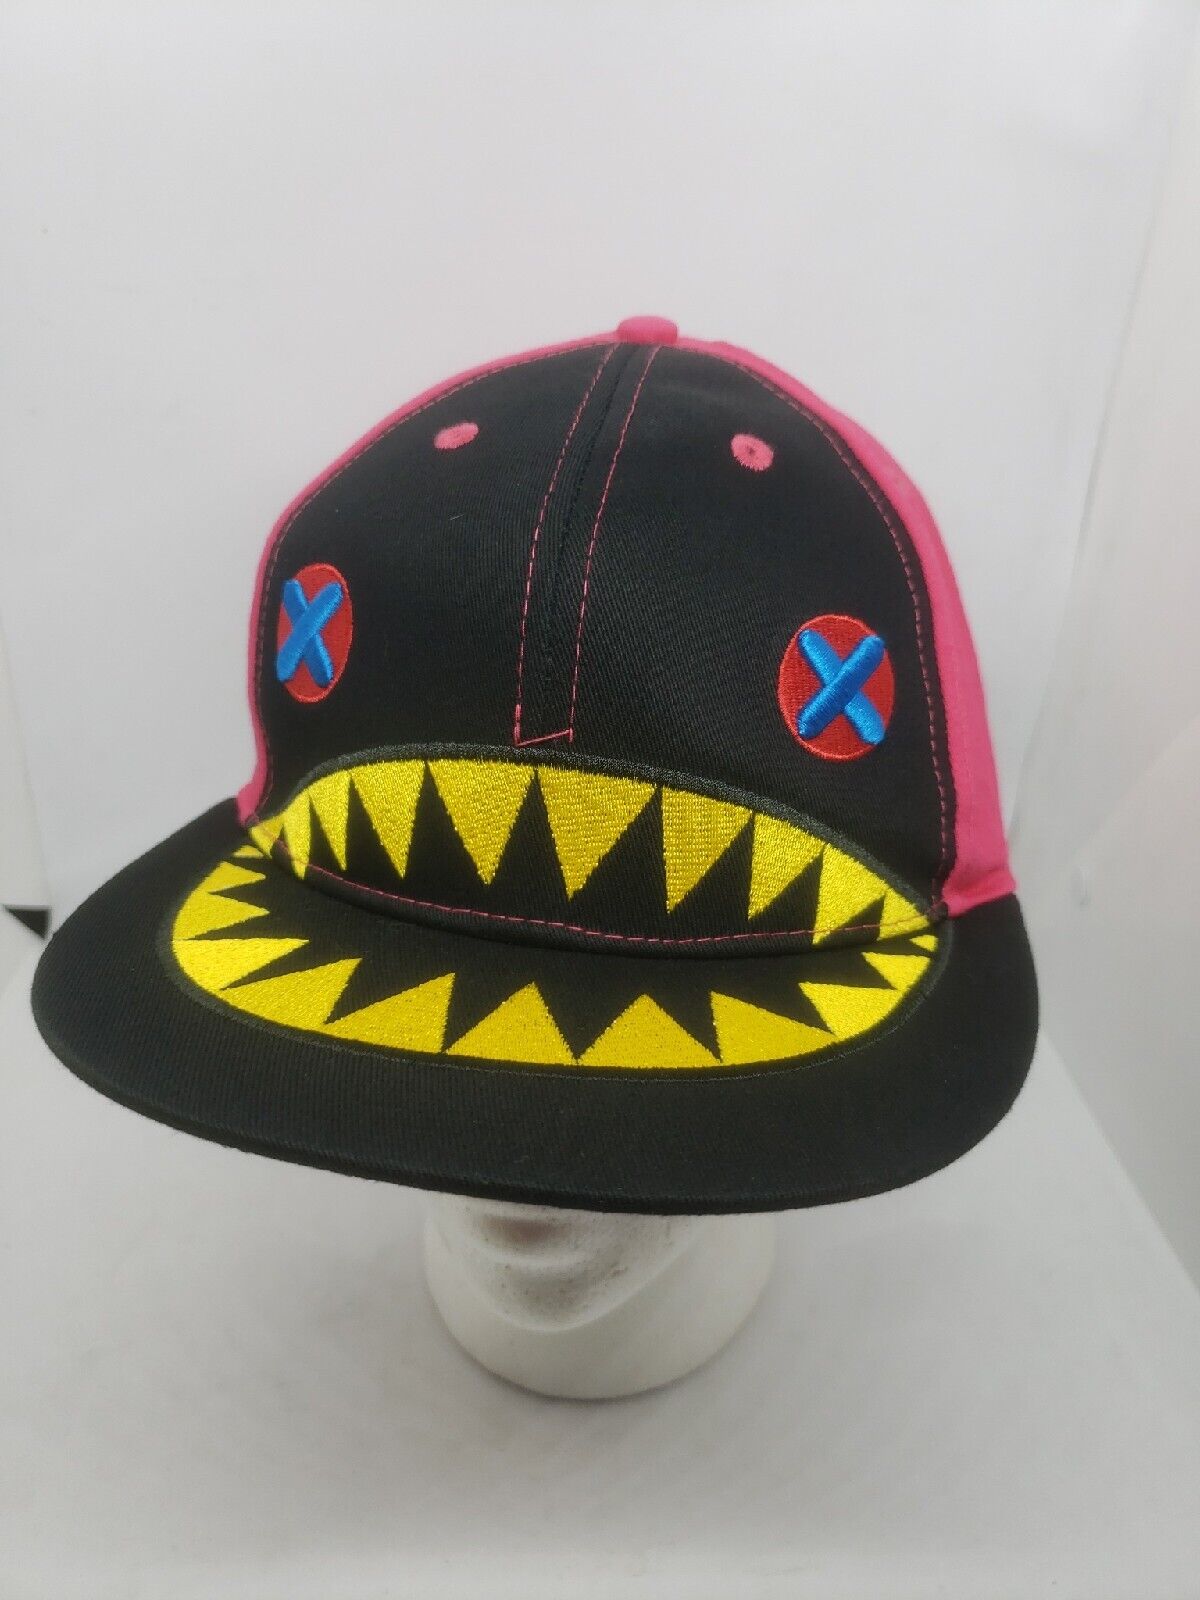 Elstinko Snapback Cap Hat One Size Adjustable Pink Black Authentic Locomo |  eBay